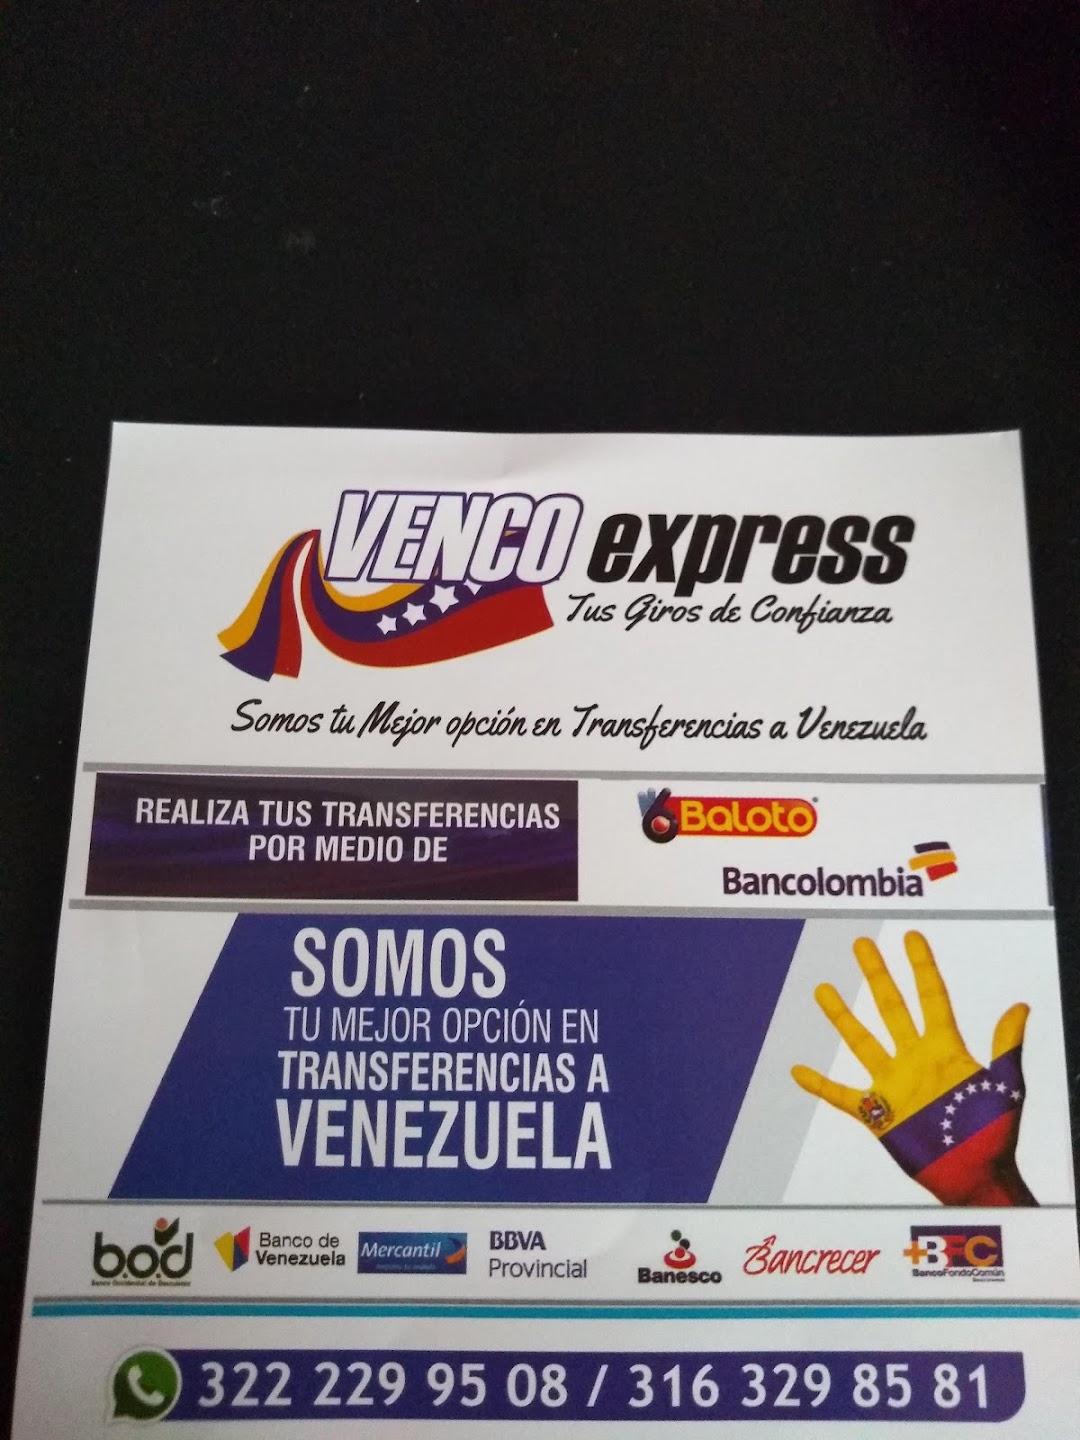 VencoExpress